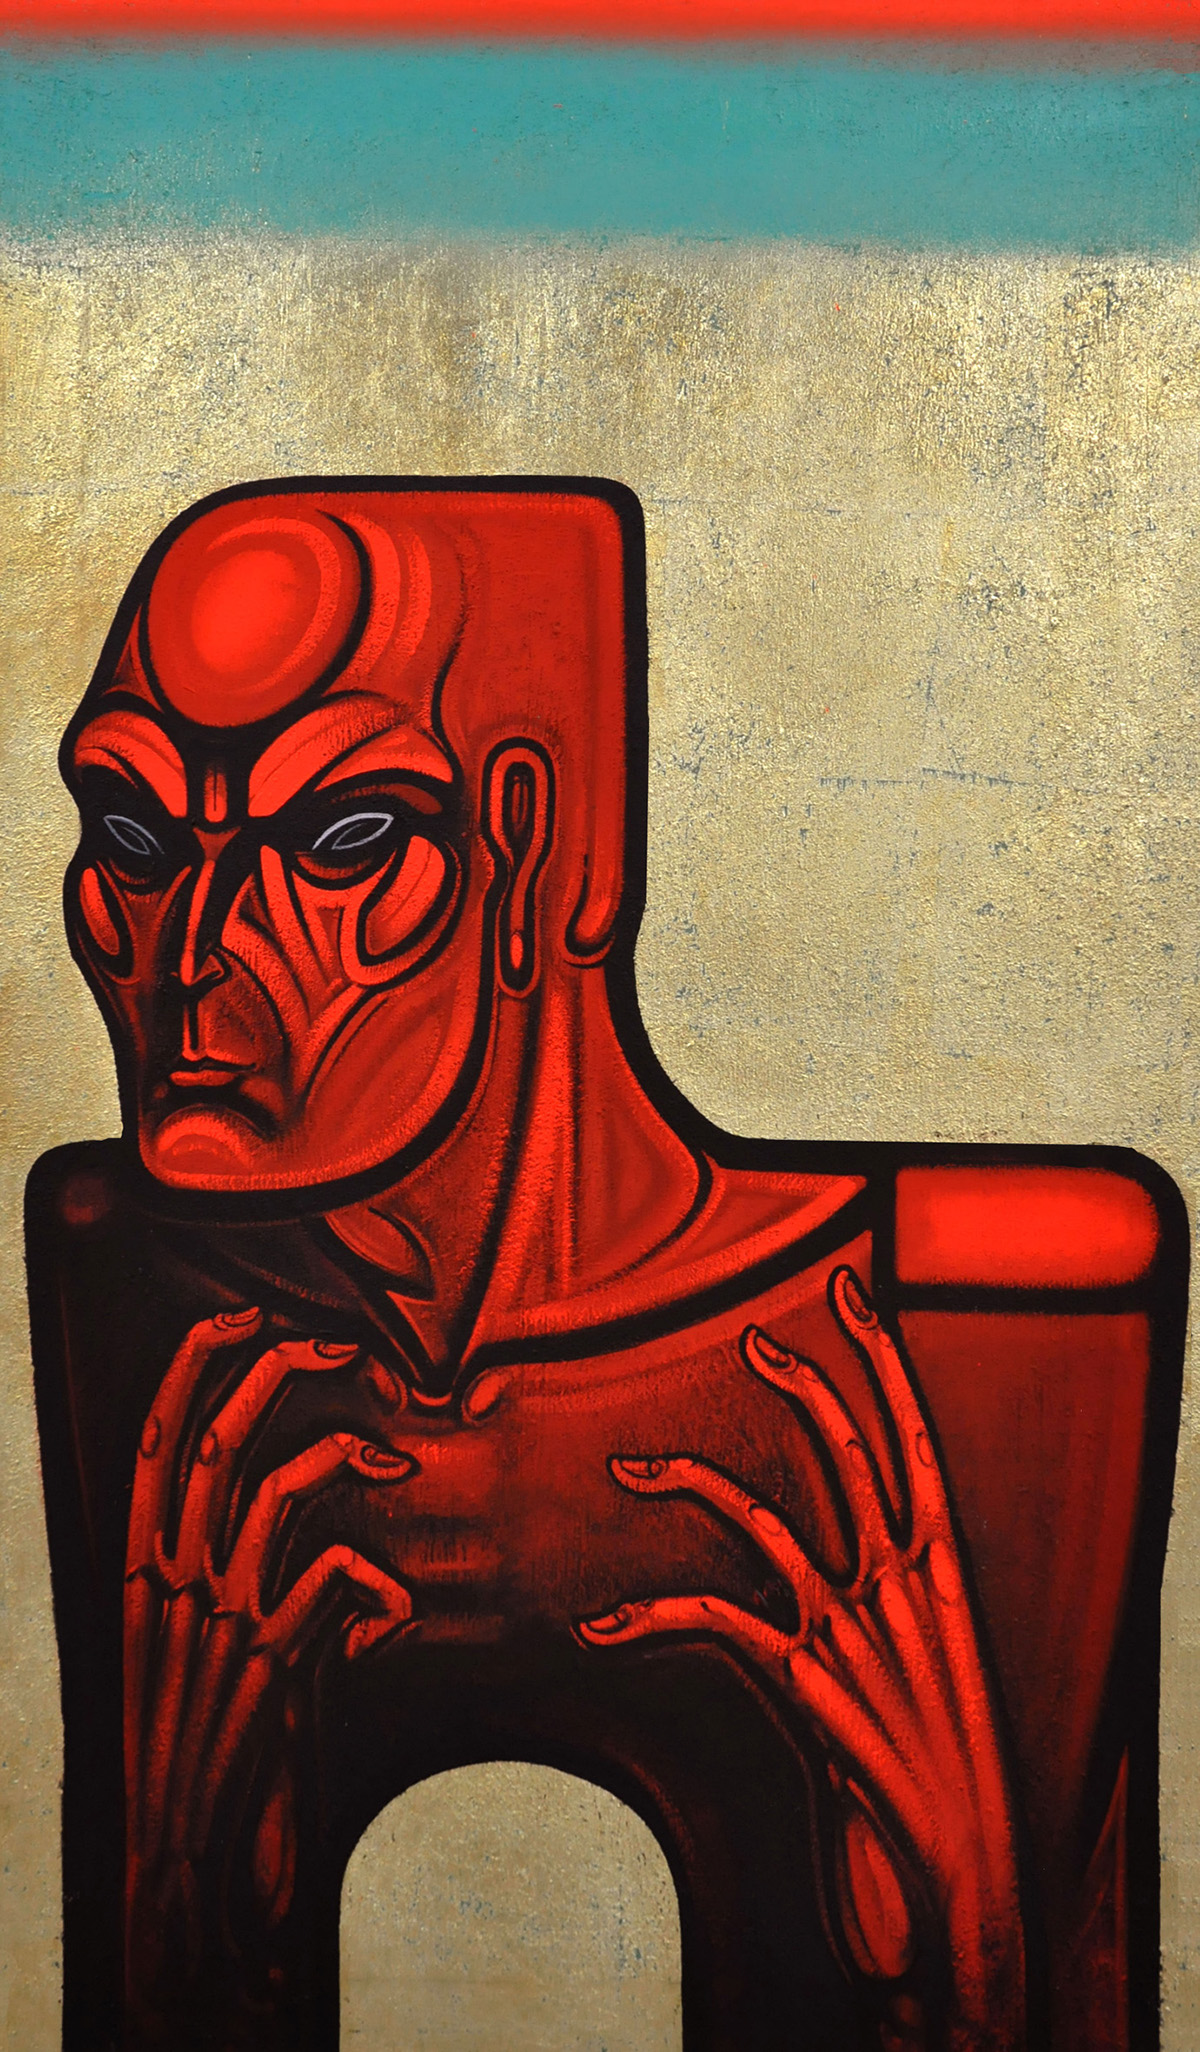 Sergii Radkevych seven deadly sins canvas gold black orange figure face art contemporary 2014-2015 Lviv